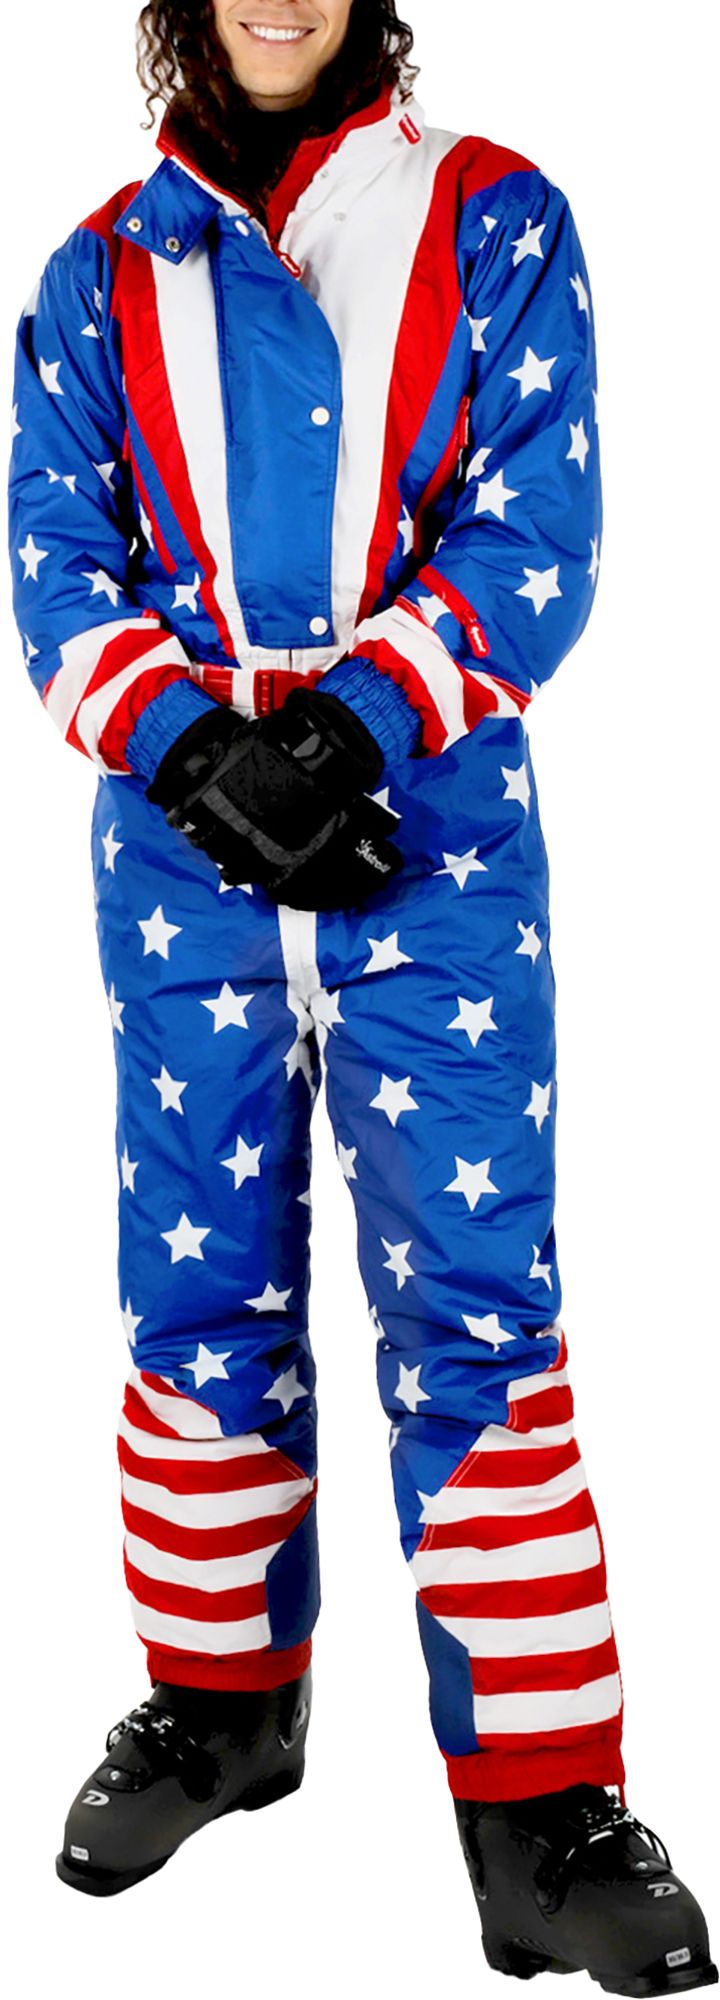 Photos - Ski Wear Tipsy Elves Men's Americana Snow Suit, Small, Blue 22DBPMMMRCNSKSTXXMOU